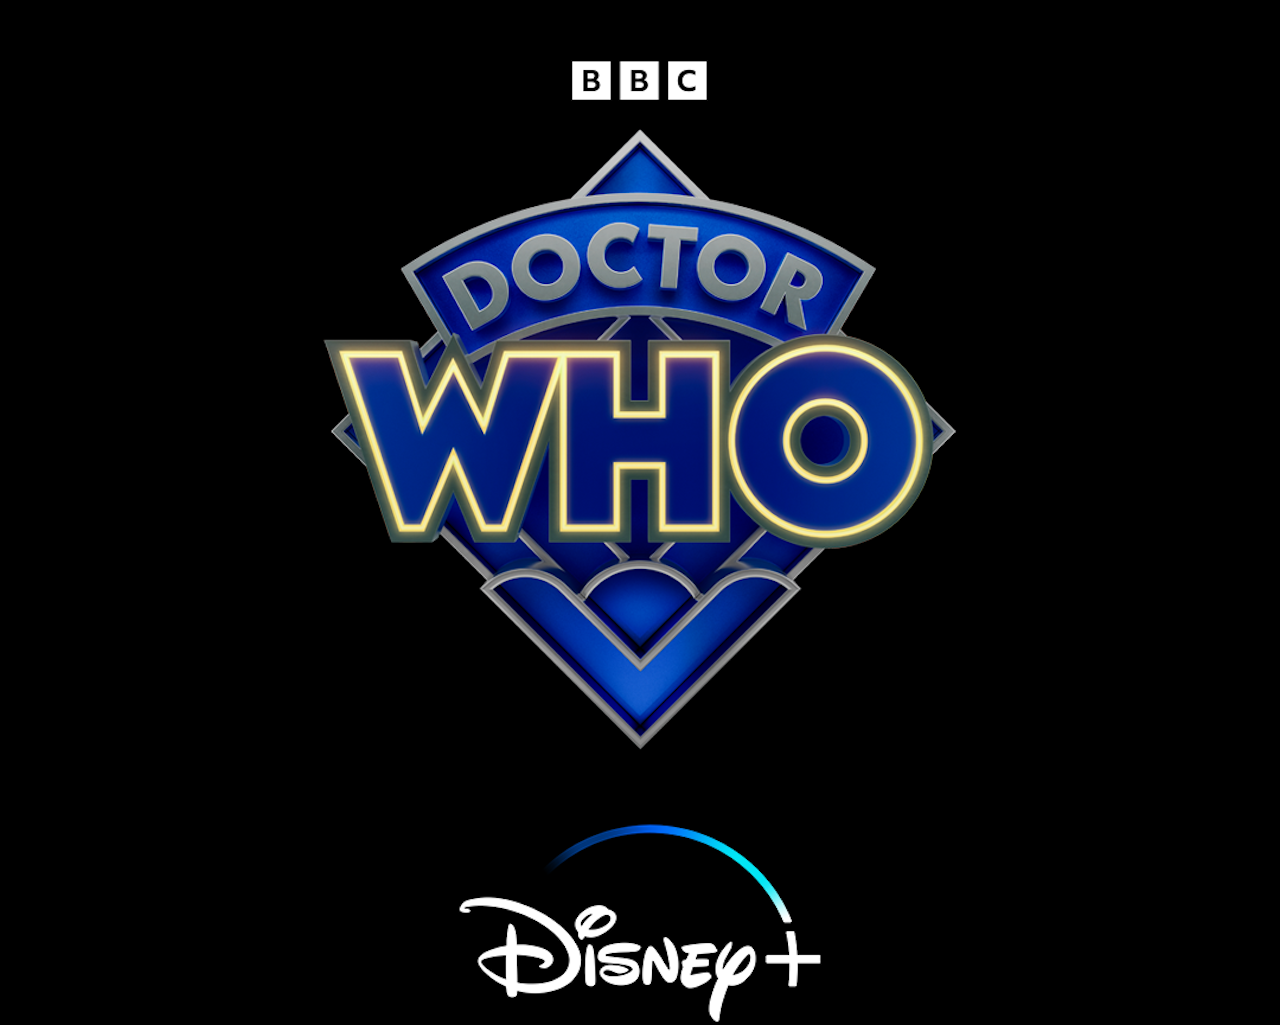 'Doctor Who' gets new logo and global distribution via Disney+